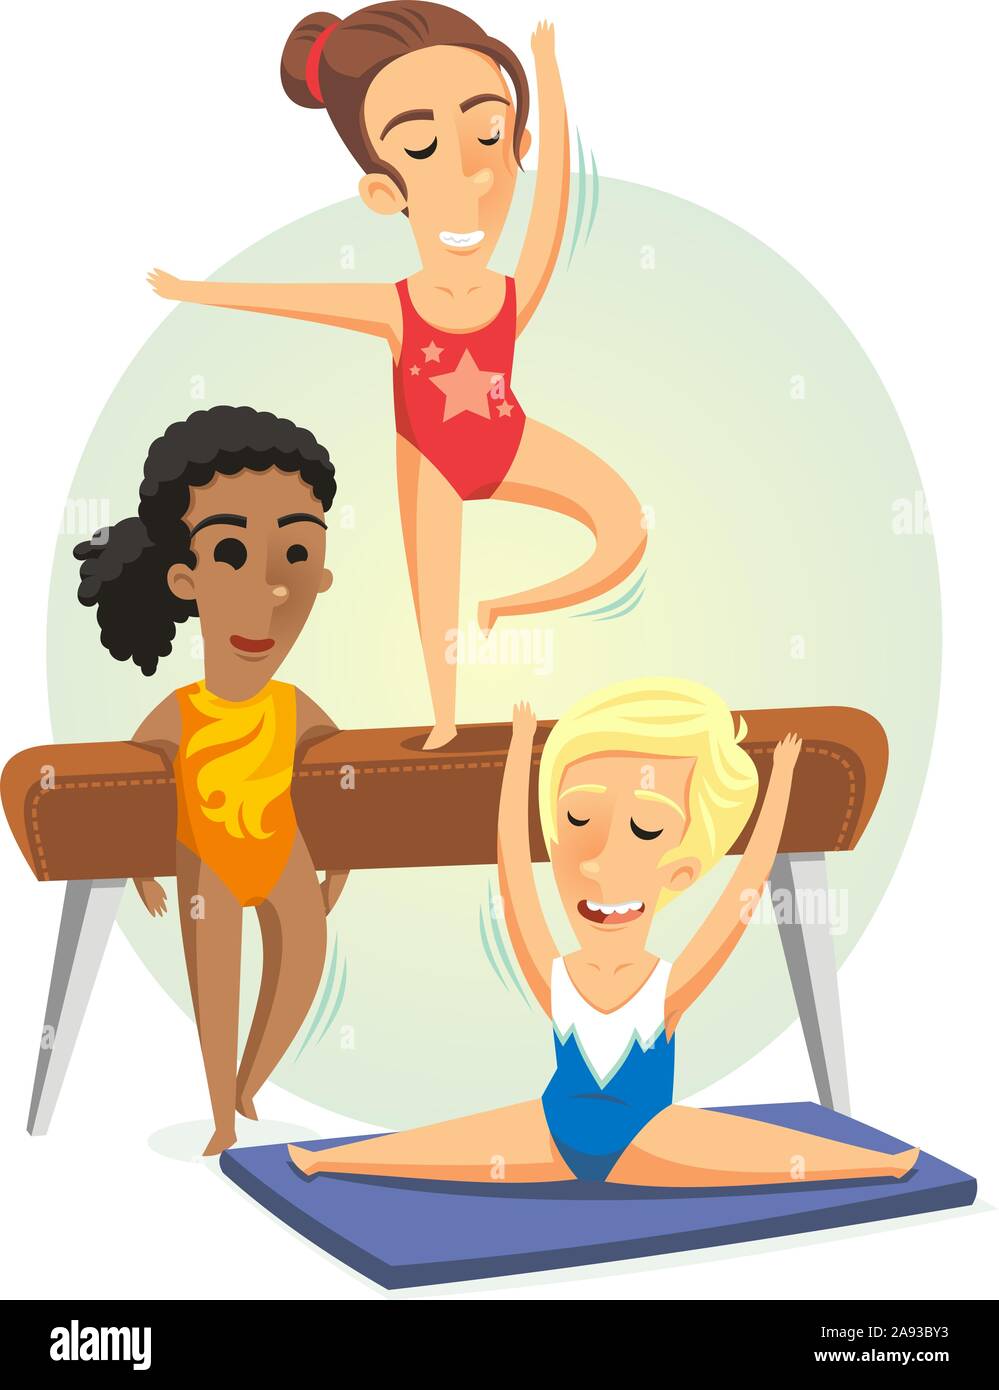 little girls at gymnastics class cartoon illustration Stock Vector